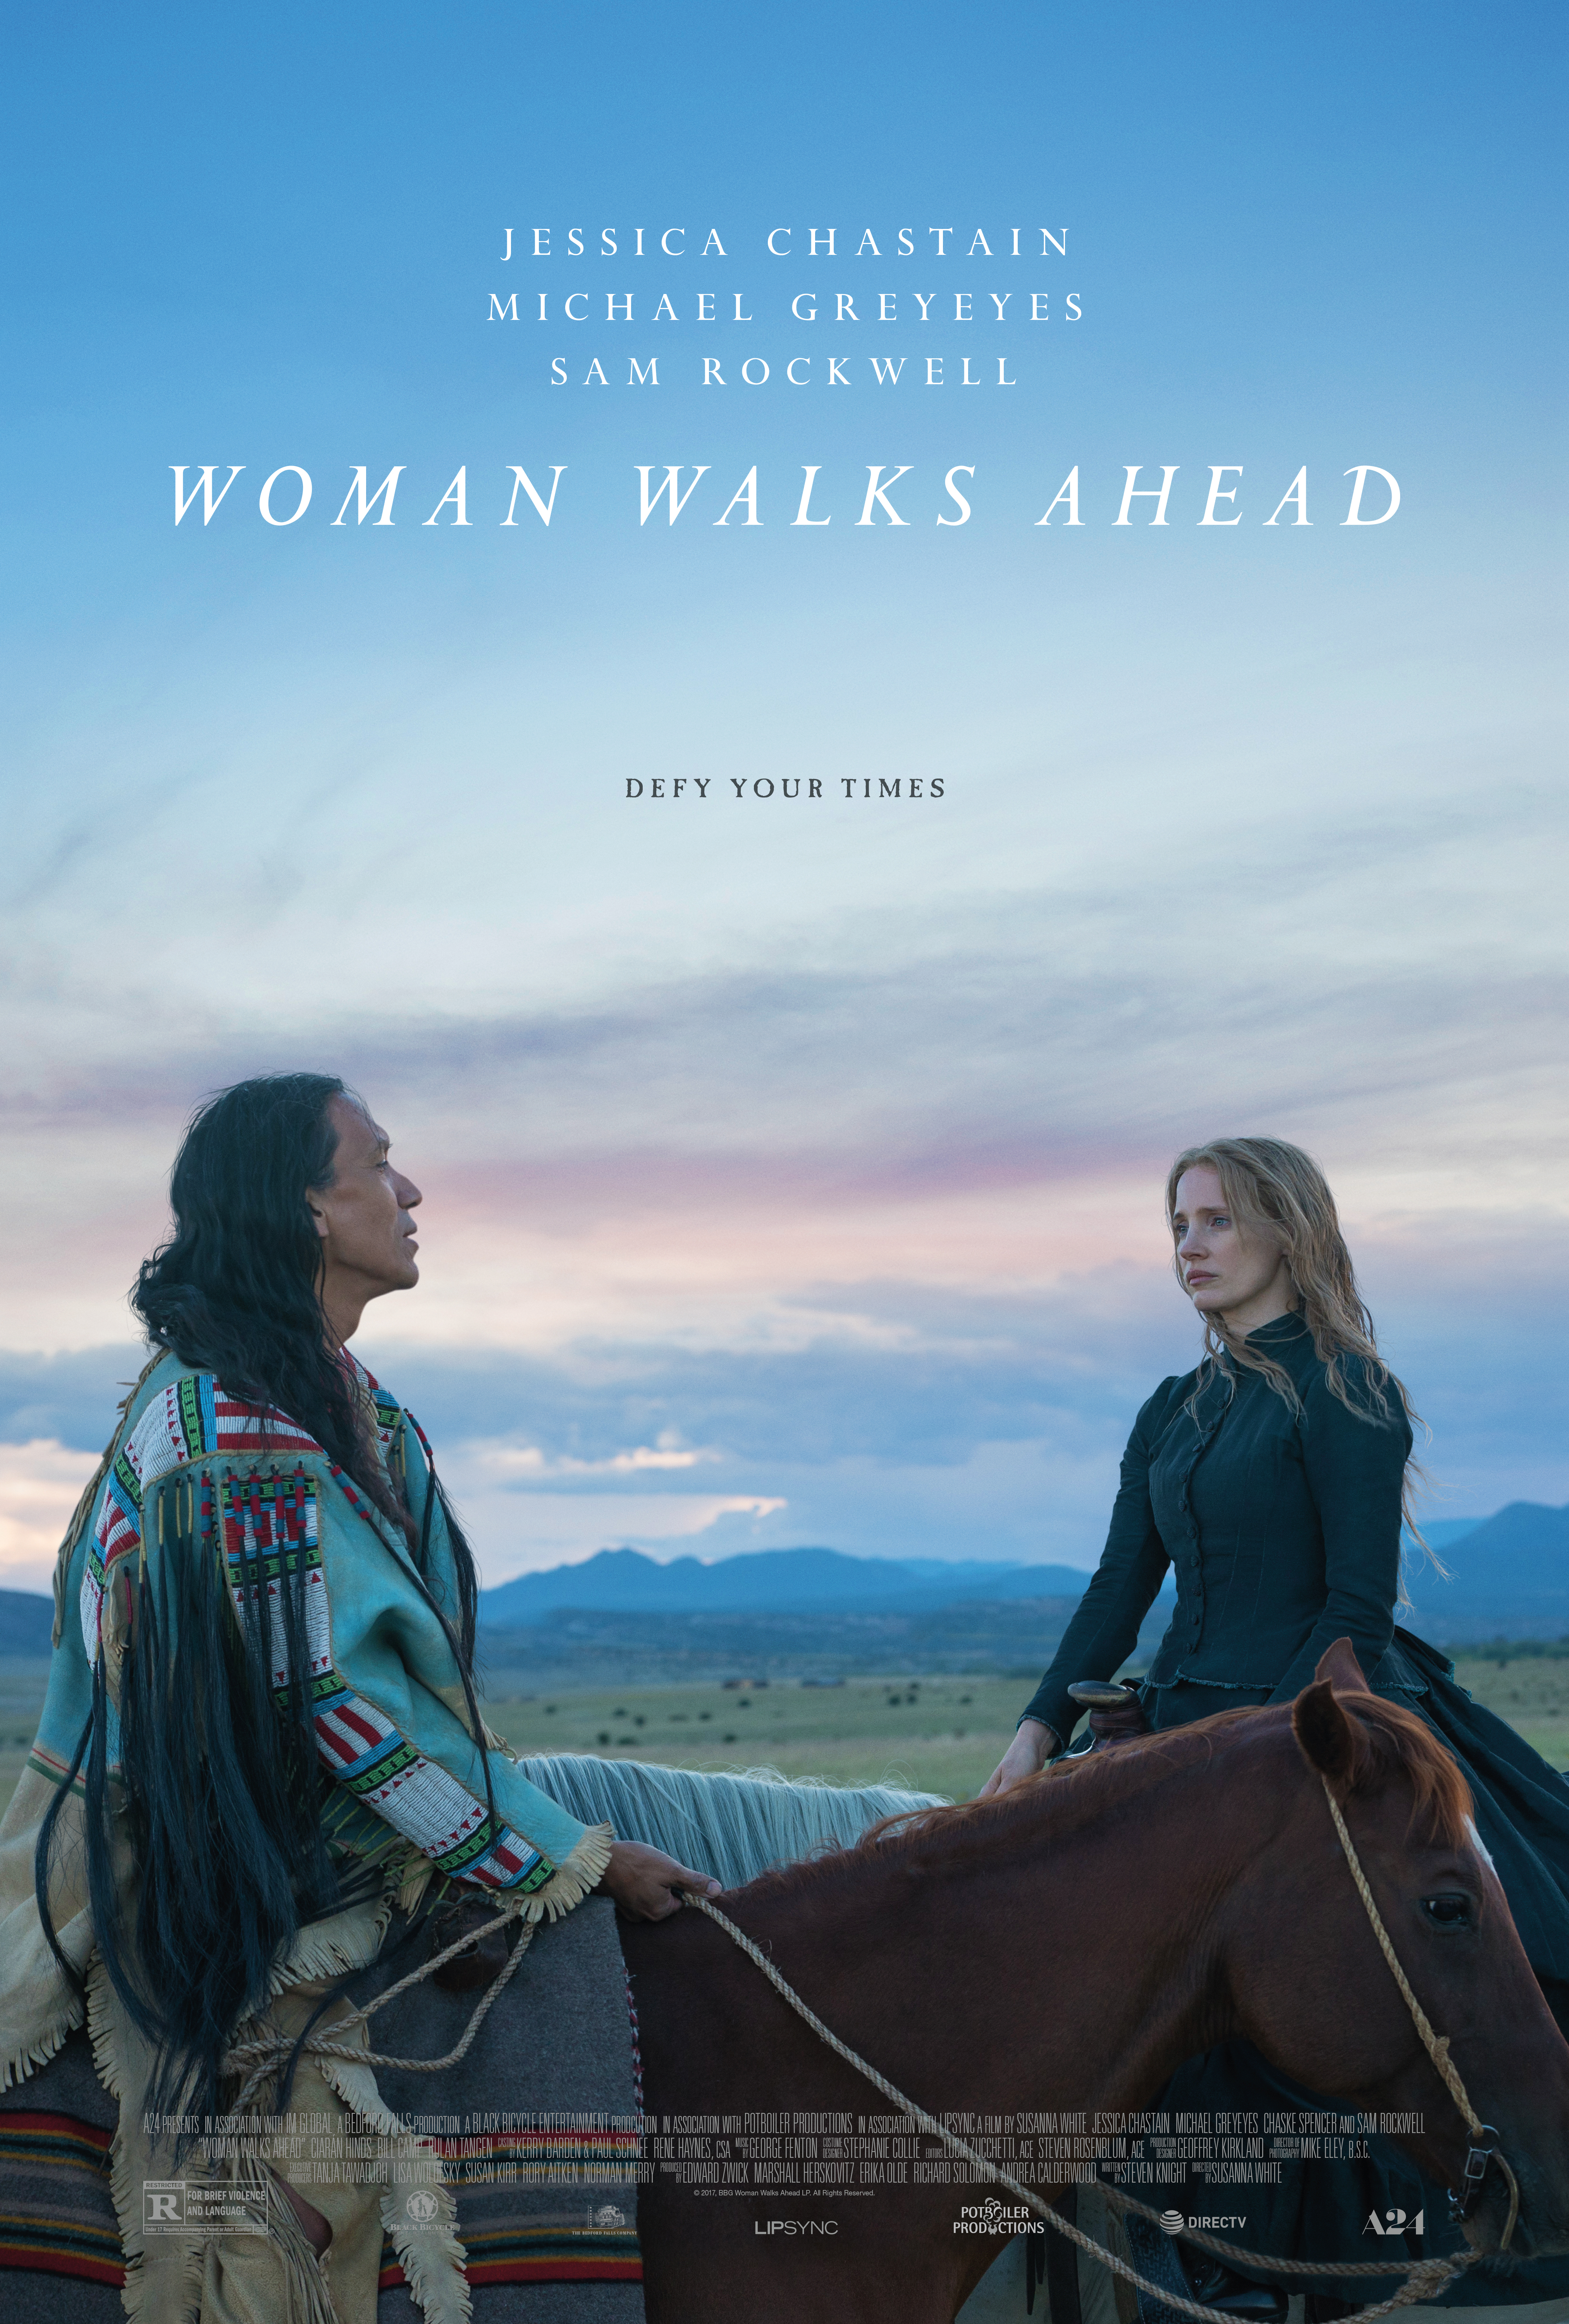 Nonton film Woman Walks Ahead layarkaca21 indoxx1 ganool online streaming terbaru